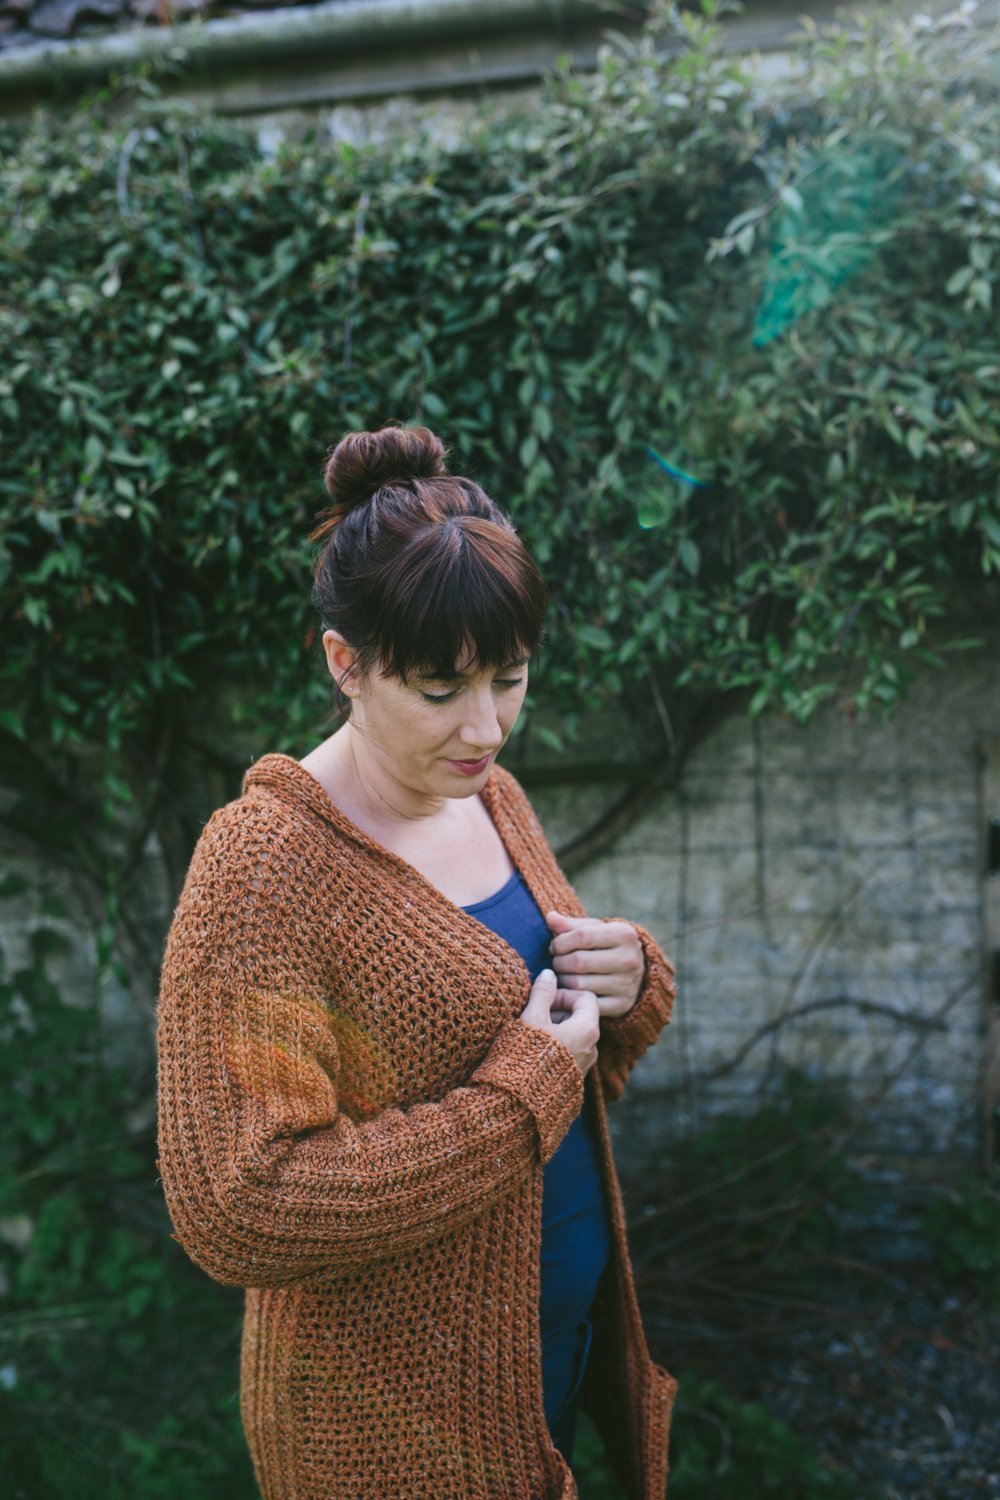 Easy Everyday Wearables by The Crochet Project Joanne Scrace